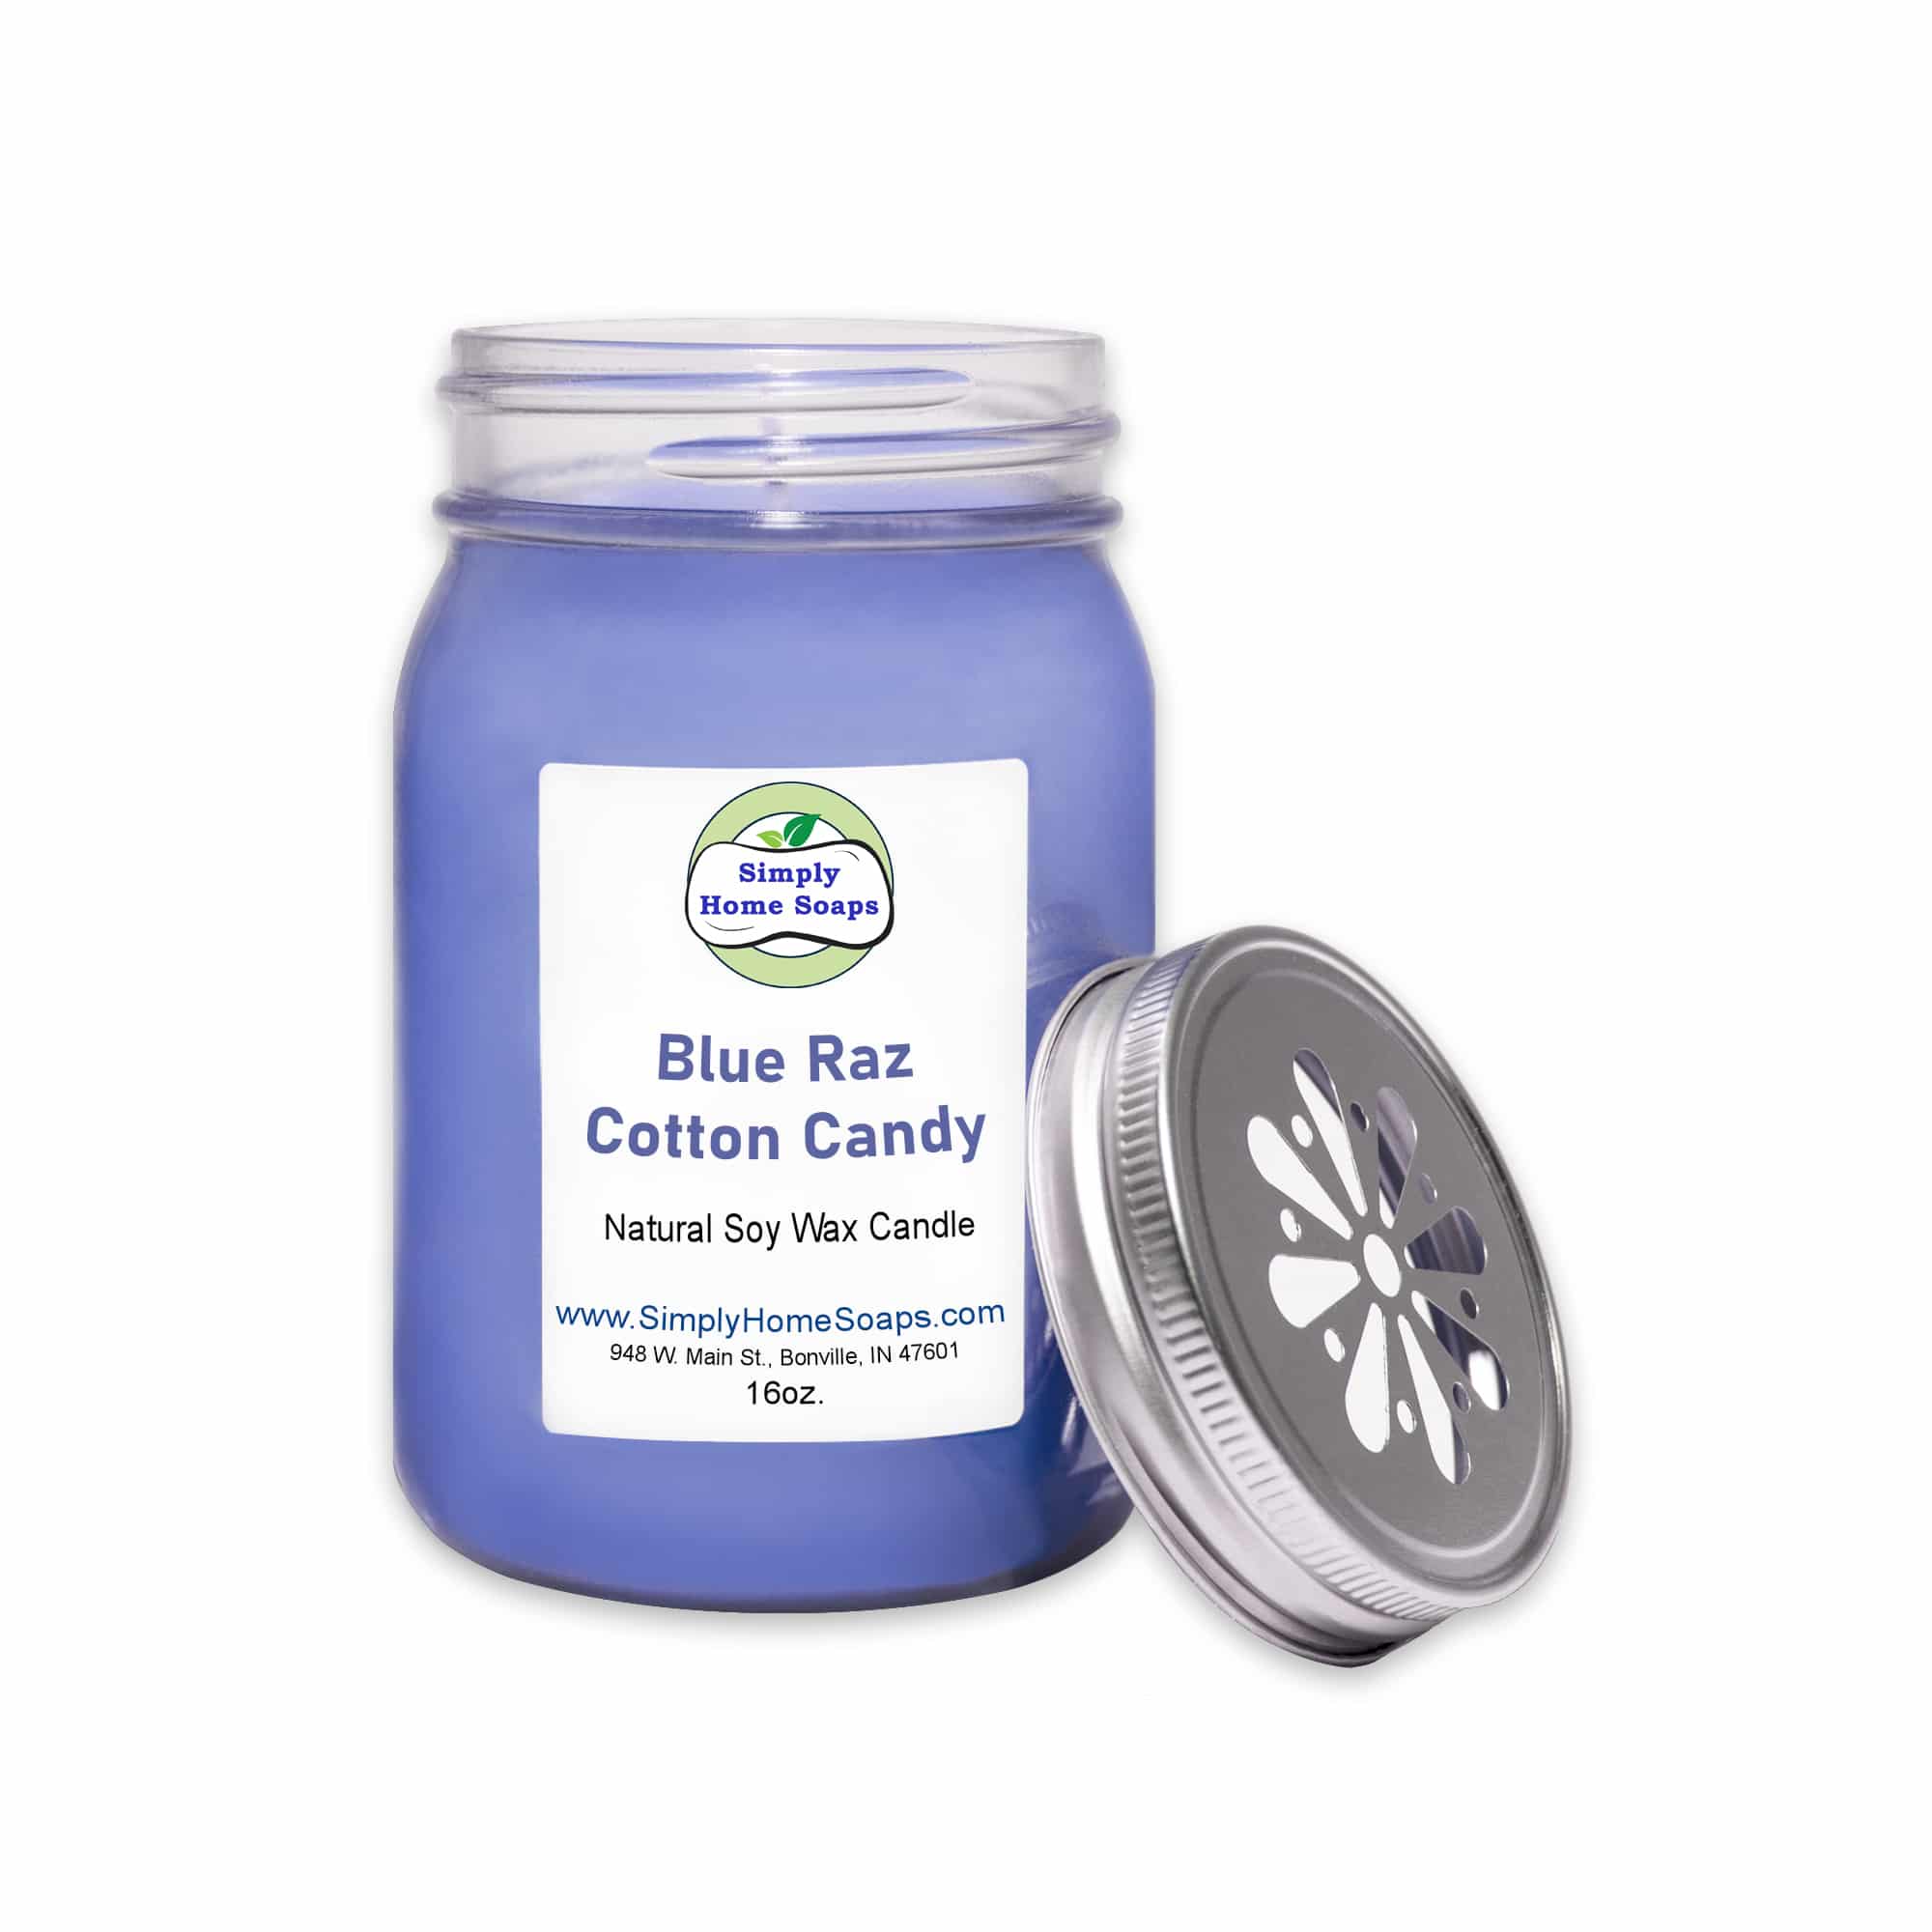 Cotton Candy Mason Jar Candle